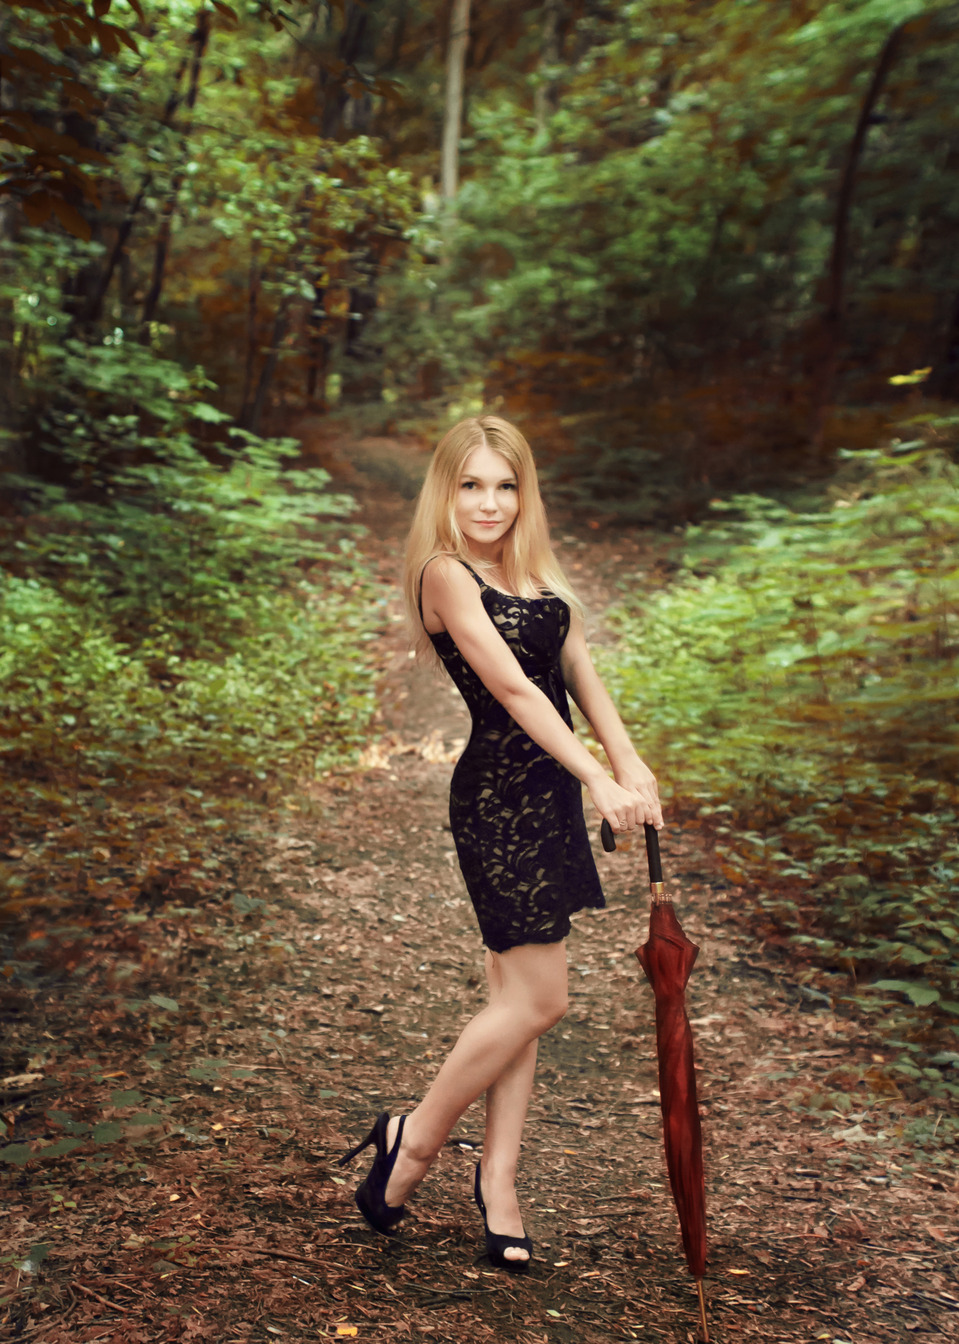 Girl with umbrella in the wood | wood, umbrella, path, fallen leafs